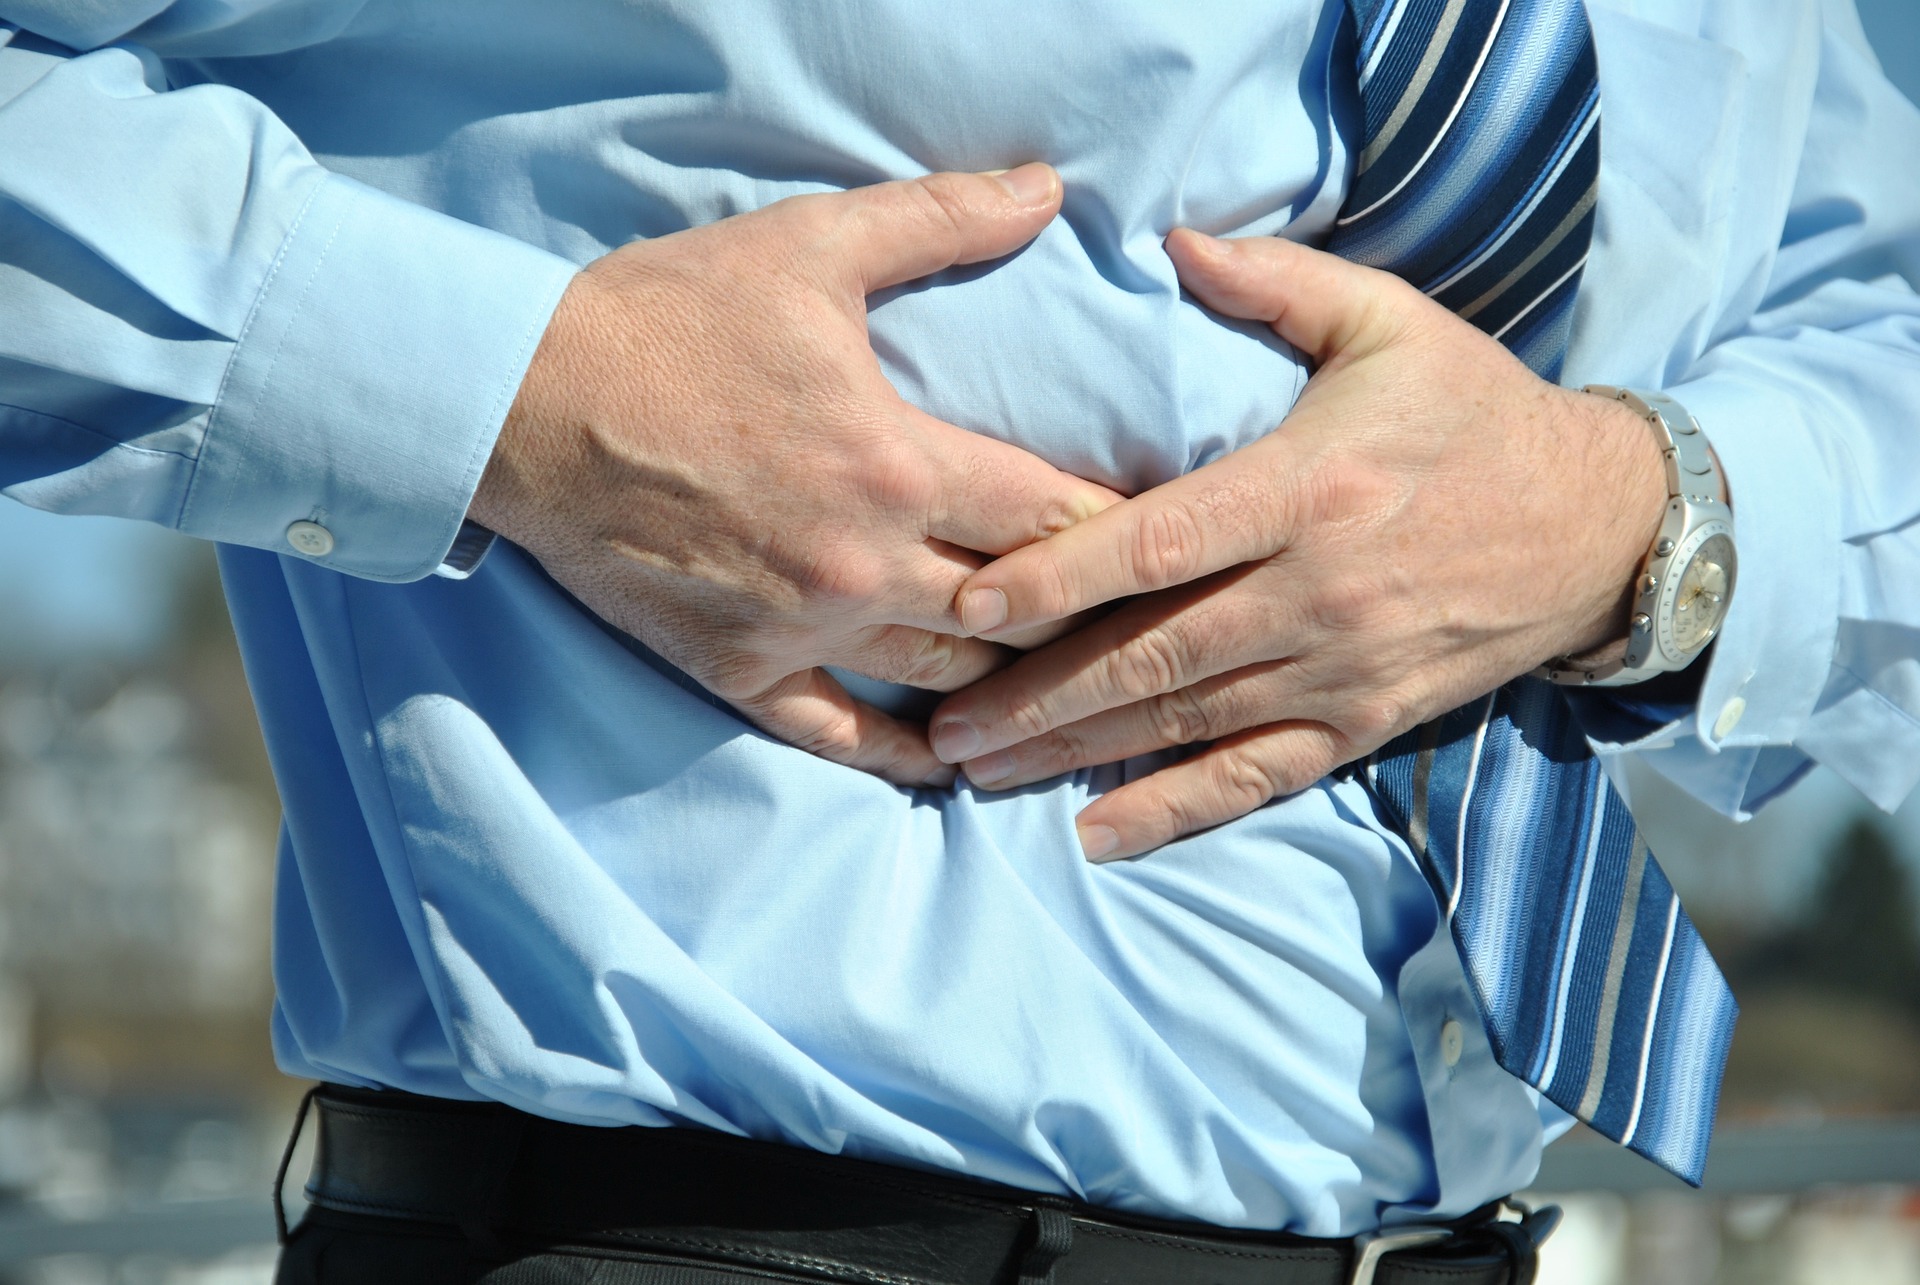 91. Sudden Stomach Stop - My Gastroparesis Story